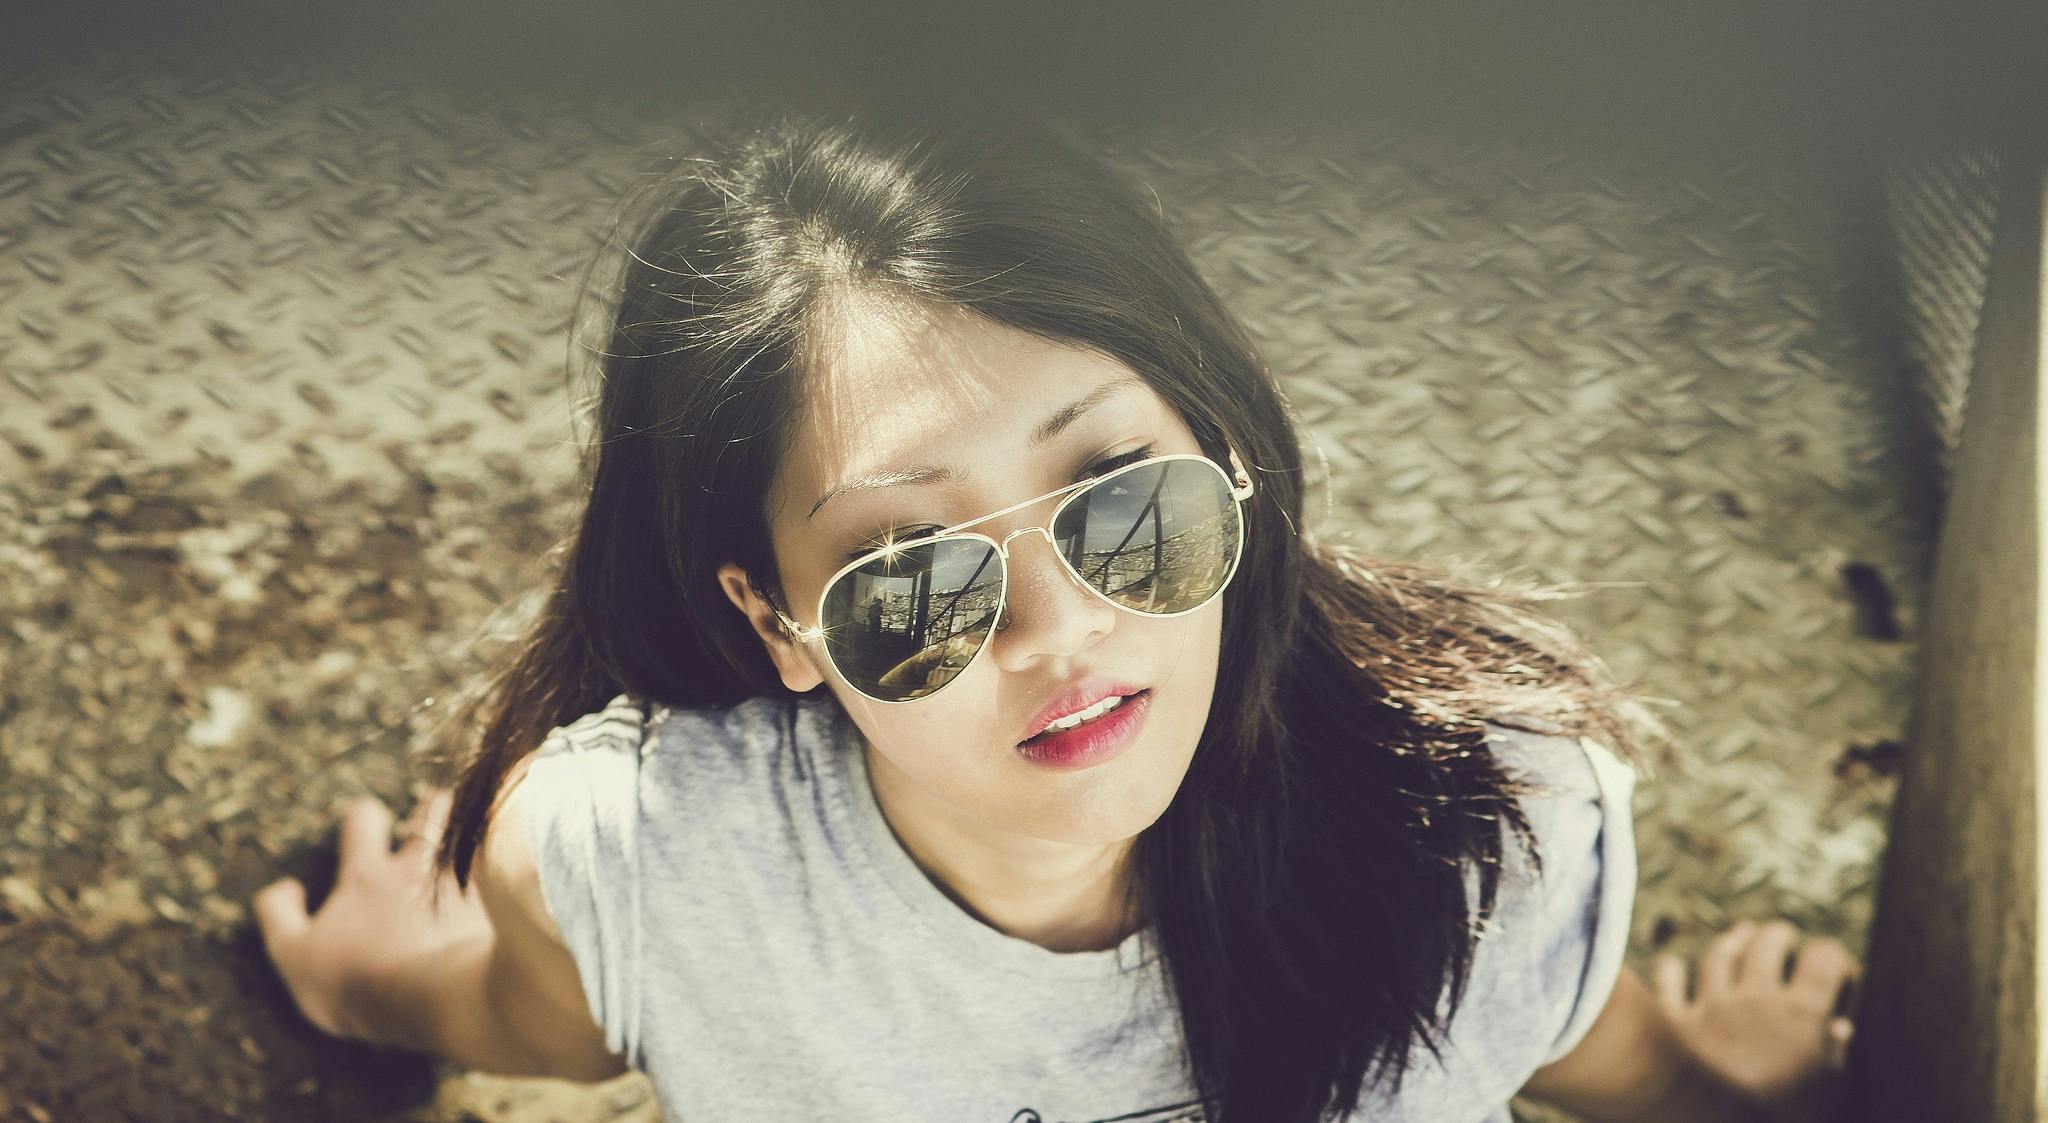 https://images.pexels.com/photos/52739/woman-model-sunlight-sunglasses-52739.jpeg